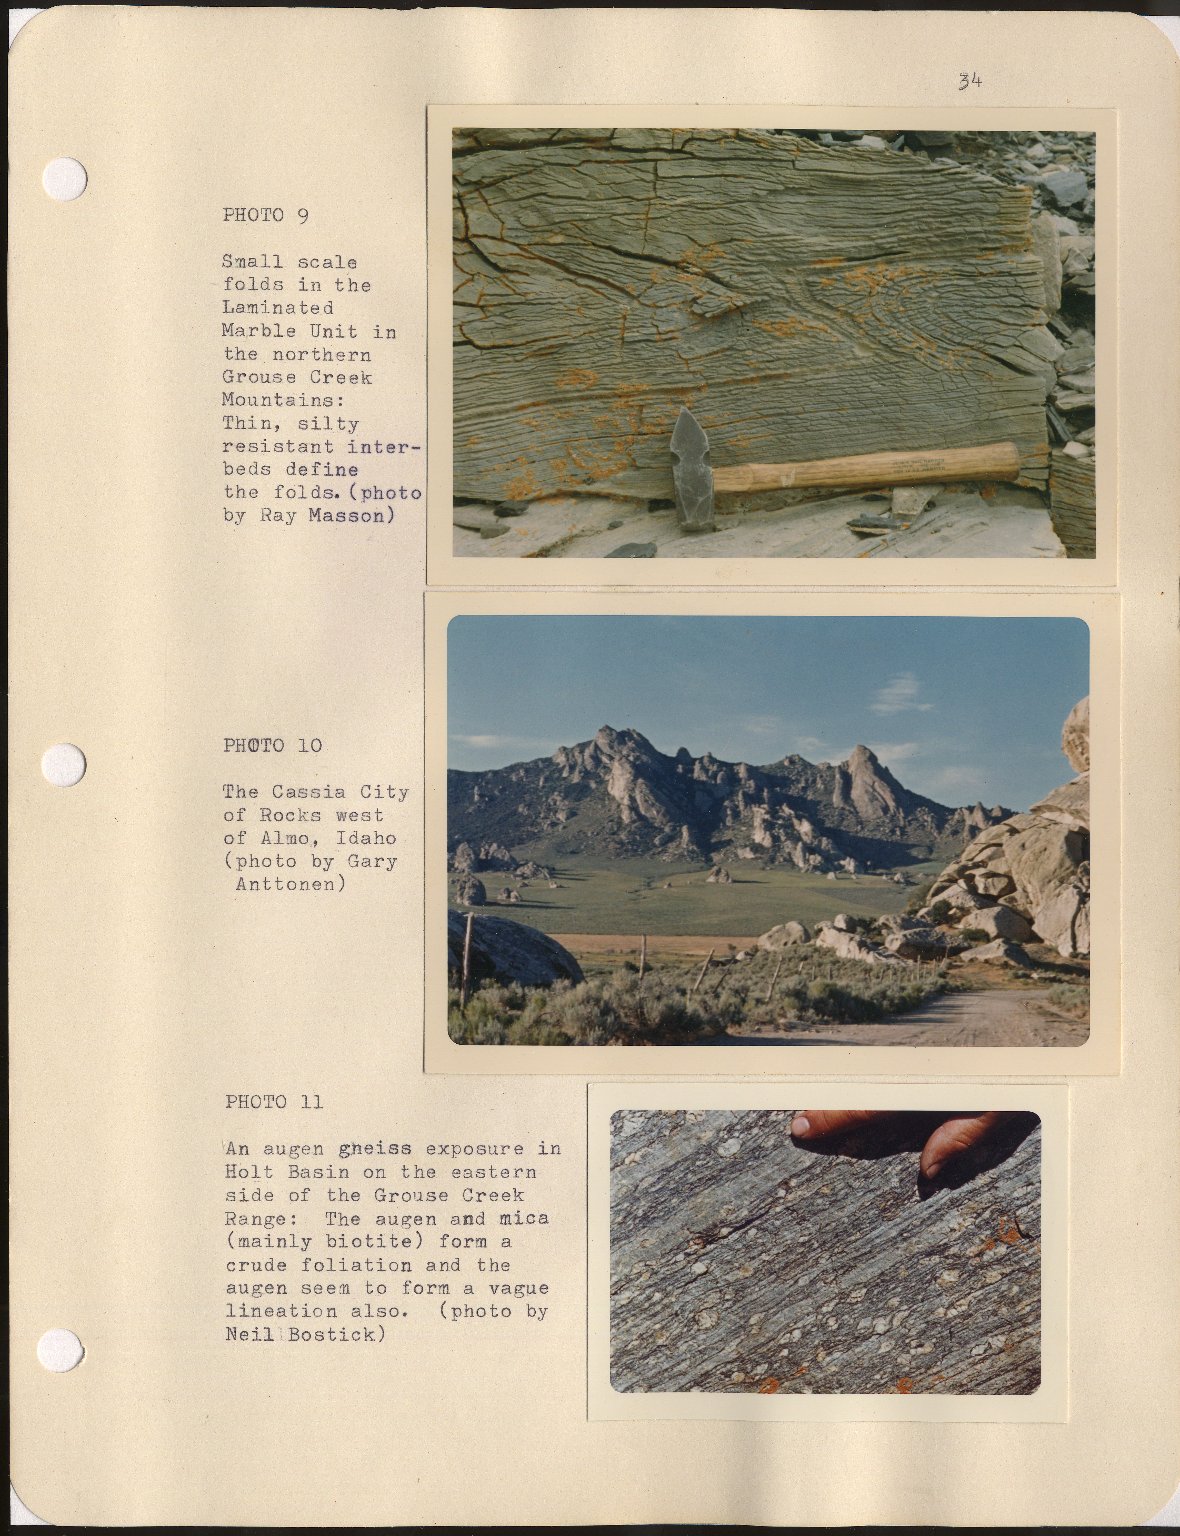 Geology of the Raft River-Grouse Creek area, Utah and Idaho